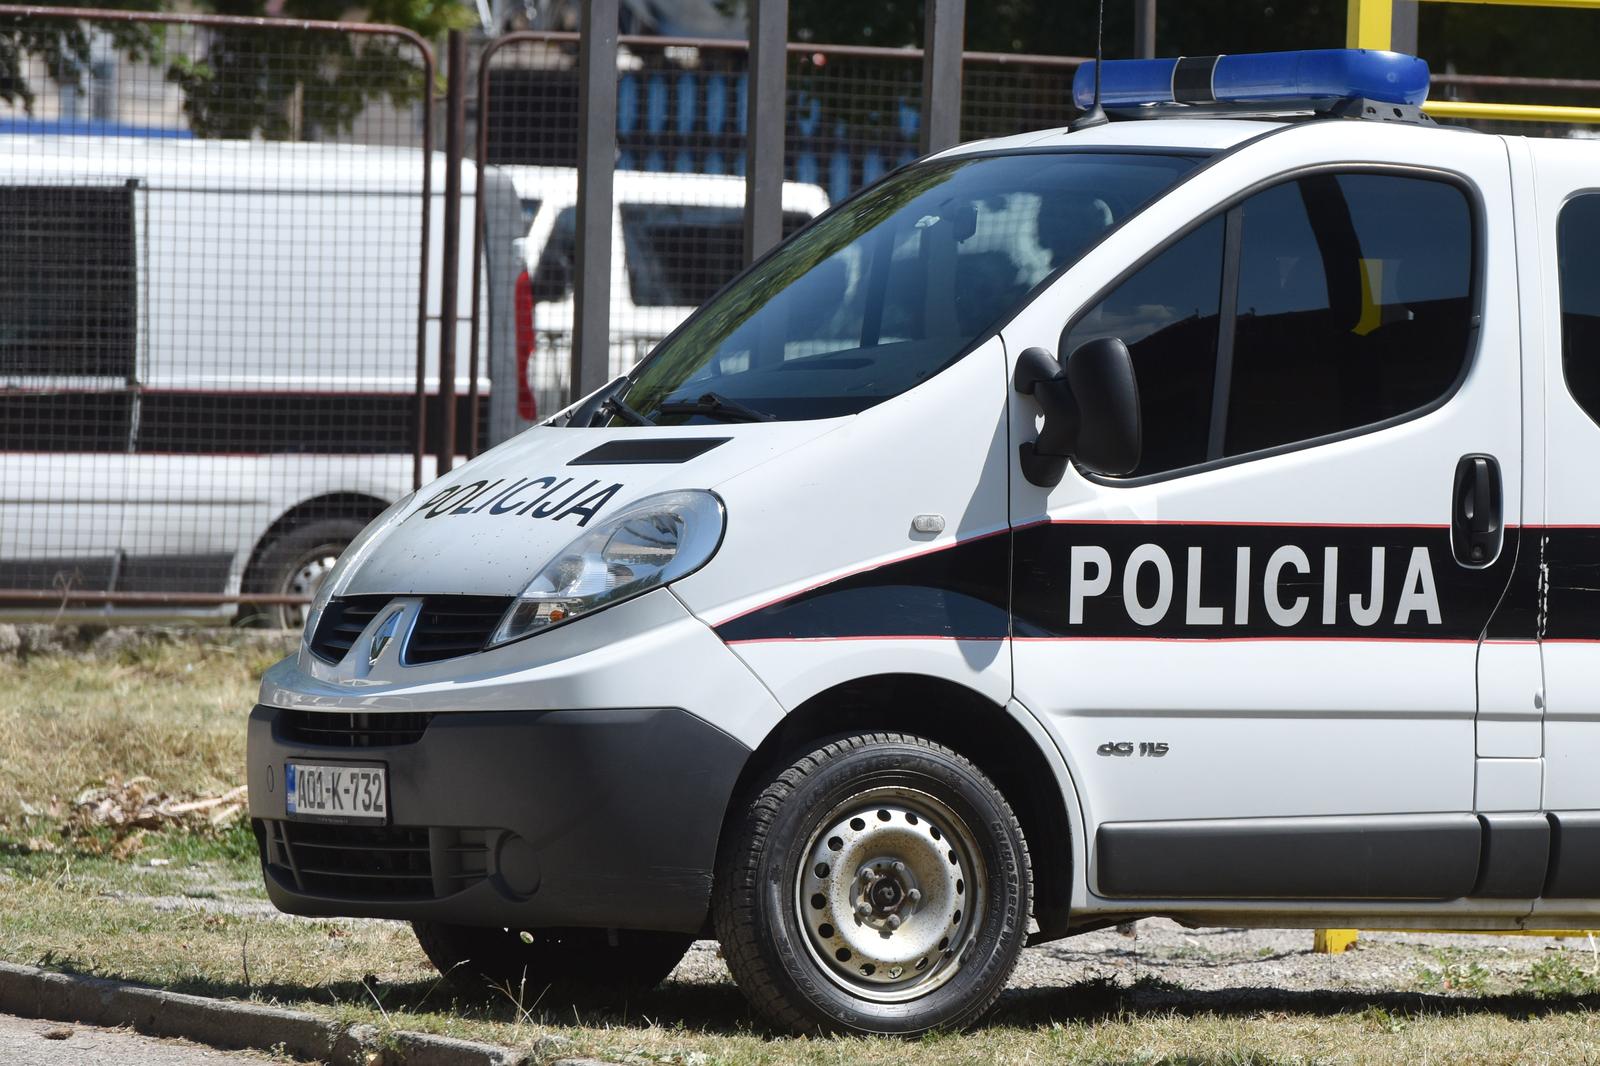 Livno: Policija Bosne i Hercegovine 24.07.2018., Livno, Bosna i Hercegovina - Policija Bosne i Hercegovine. Photo: Hrvoje Jelavic/PIXSELL